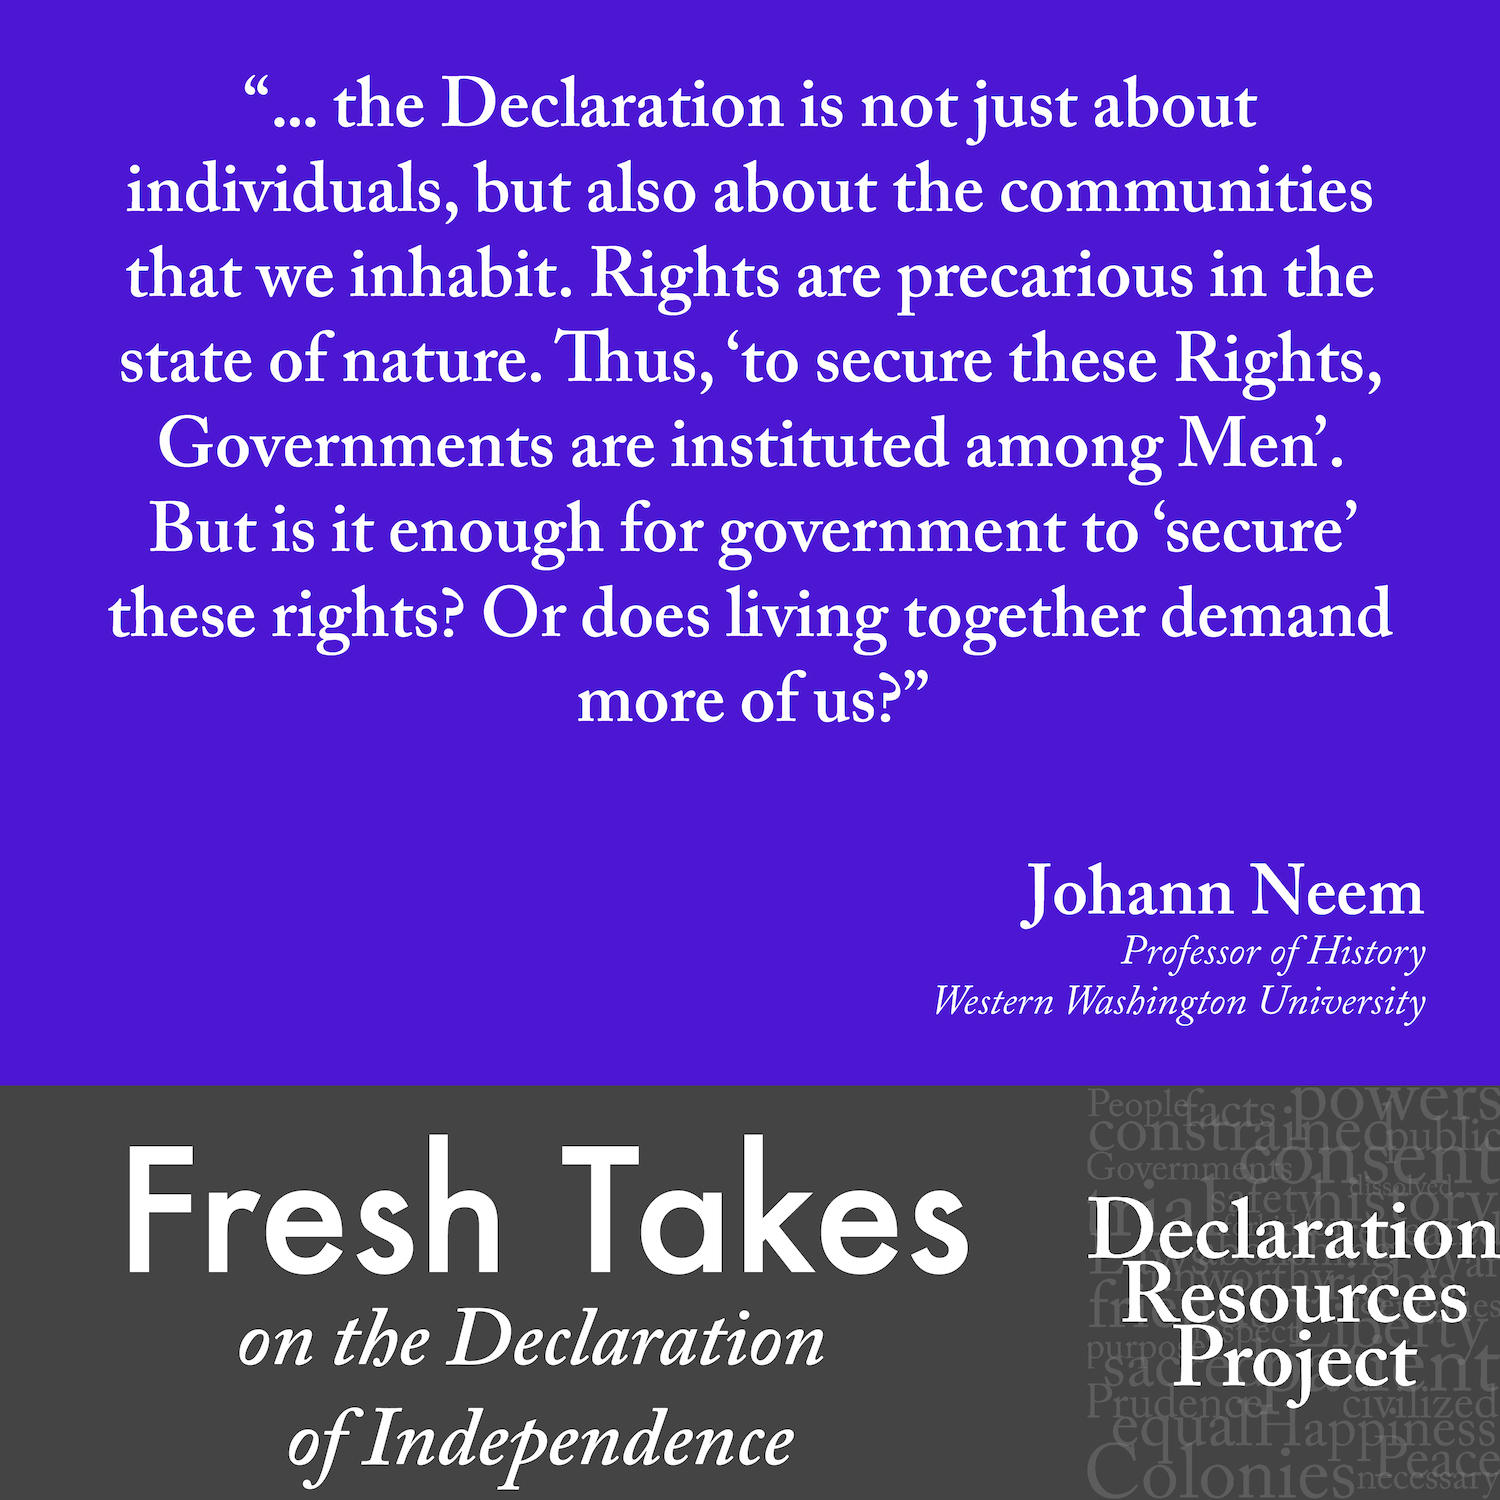 Johann Neem's Fresh Take on the Declaration of Independence